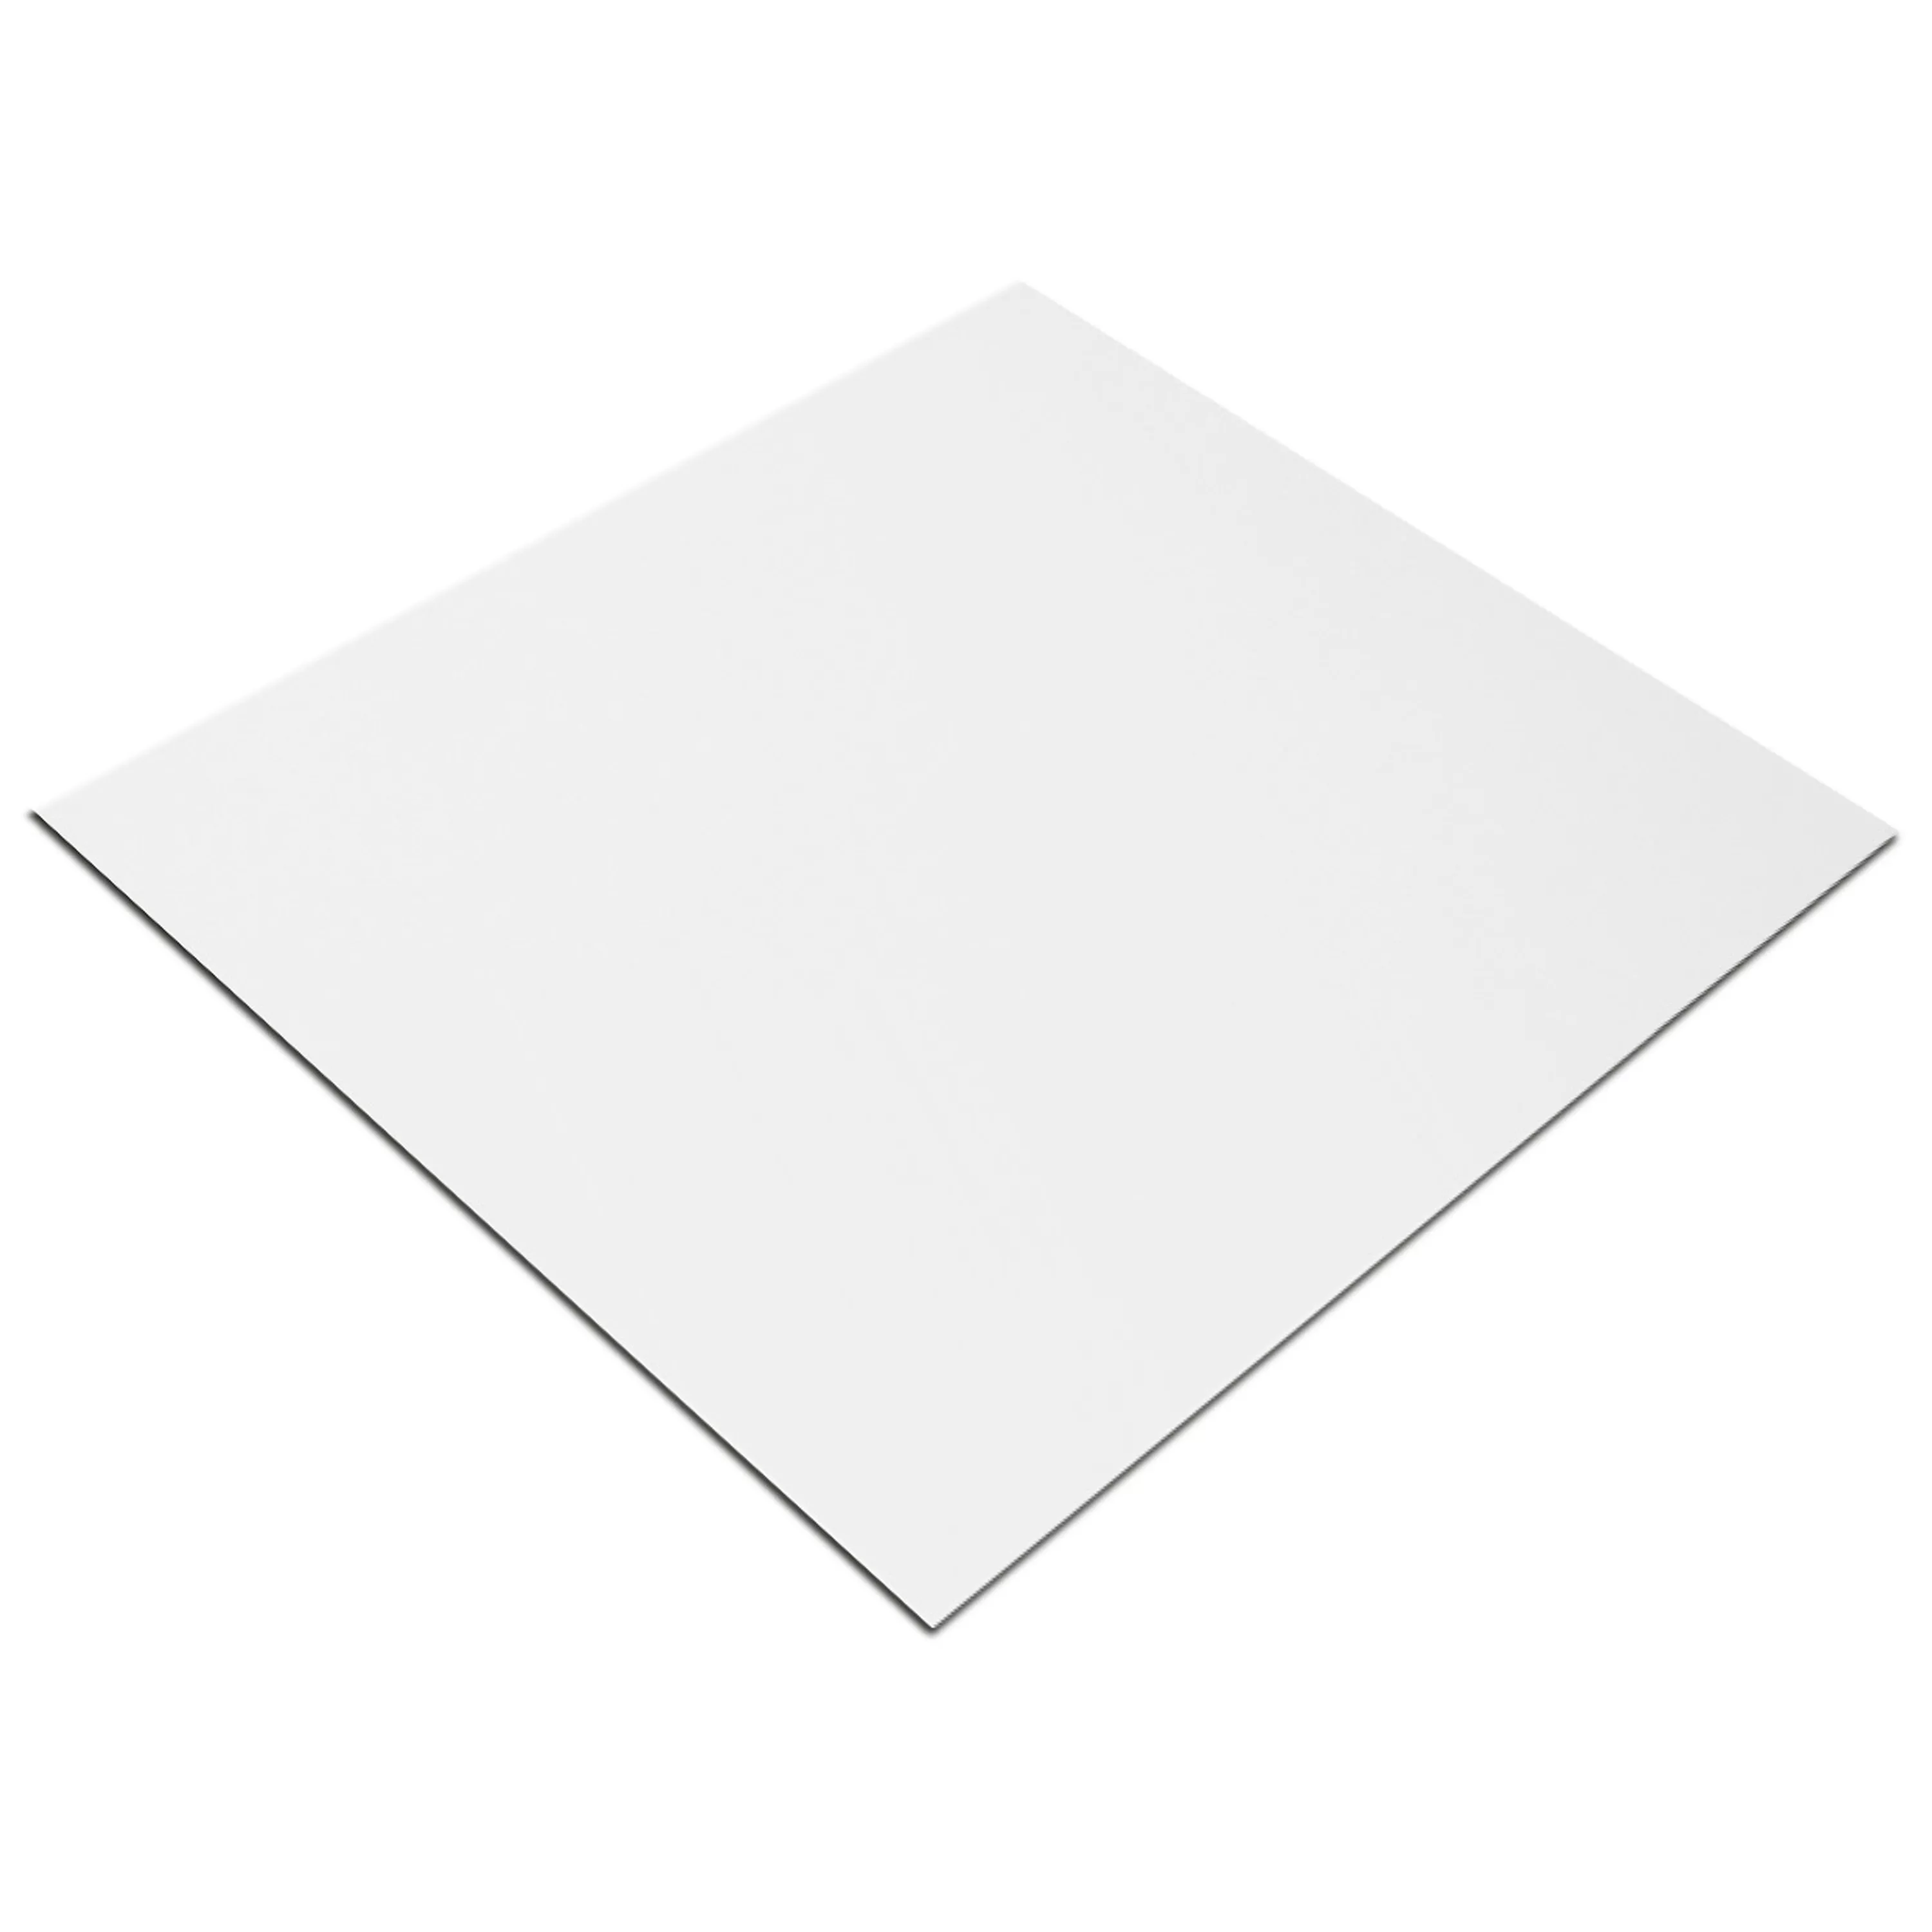 Sample Wall Tiles Fenway White Mat 20x40cm